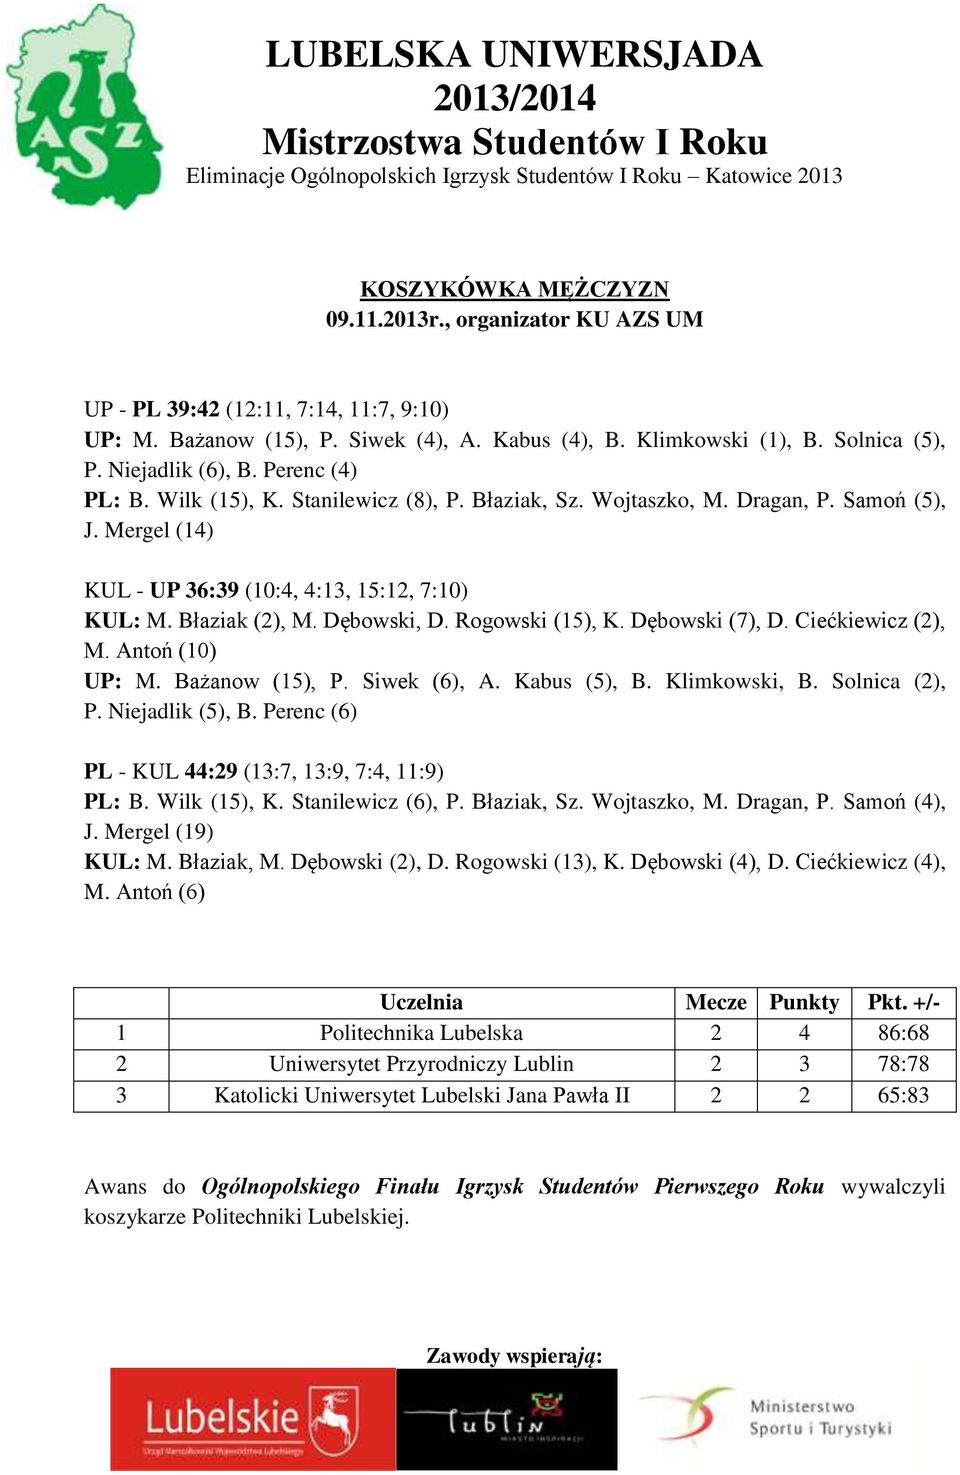 Rogowski (15), K. Dębowski (7), D. Ciećkiewicz (2), M. Antoń (10) UP: M. Bażanow (15), P. Siwek (6), A. Kabus (5), B. Klimkowski, B. Solnica (2), P. Niejadlik (5), B.